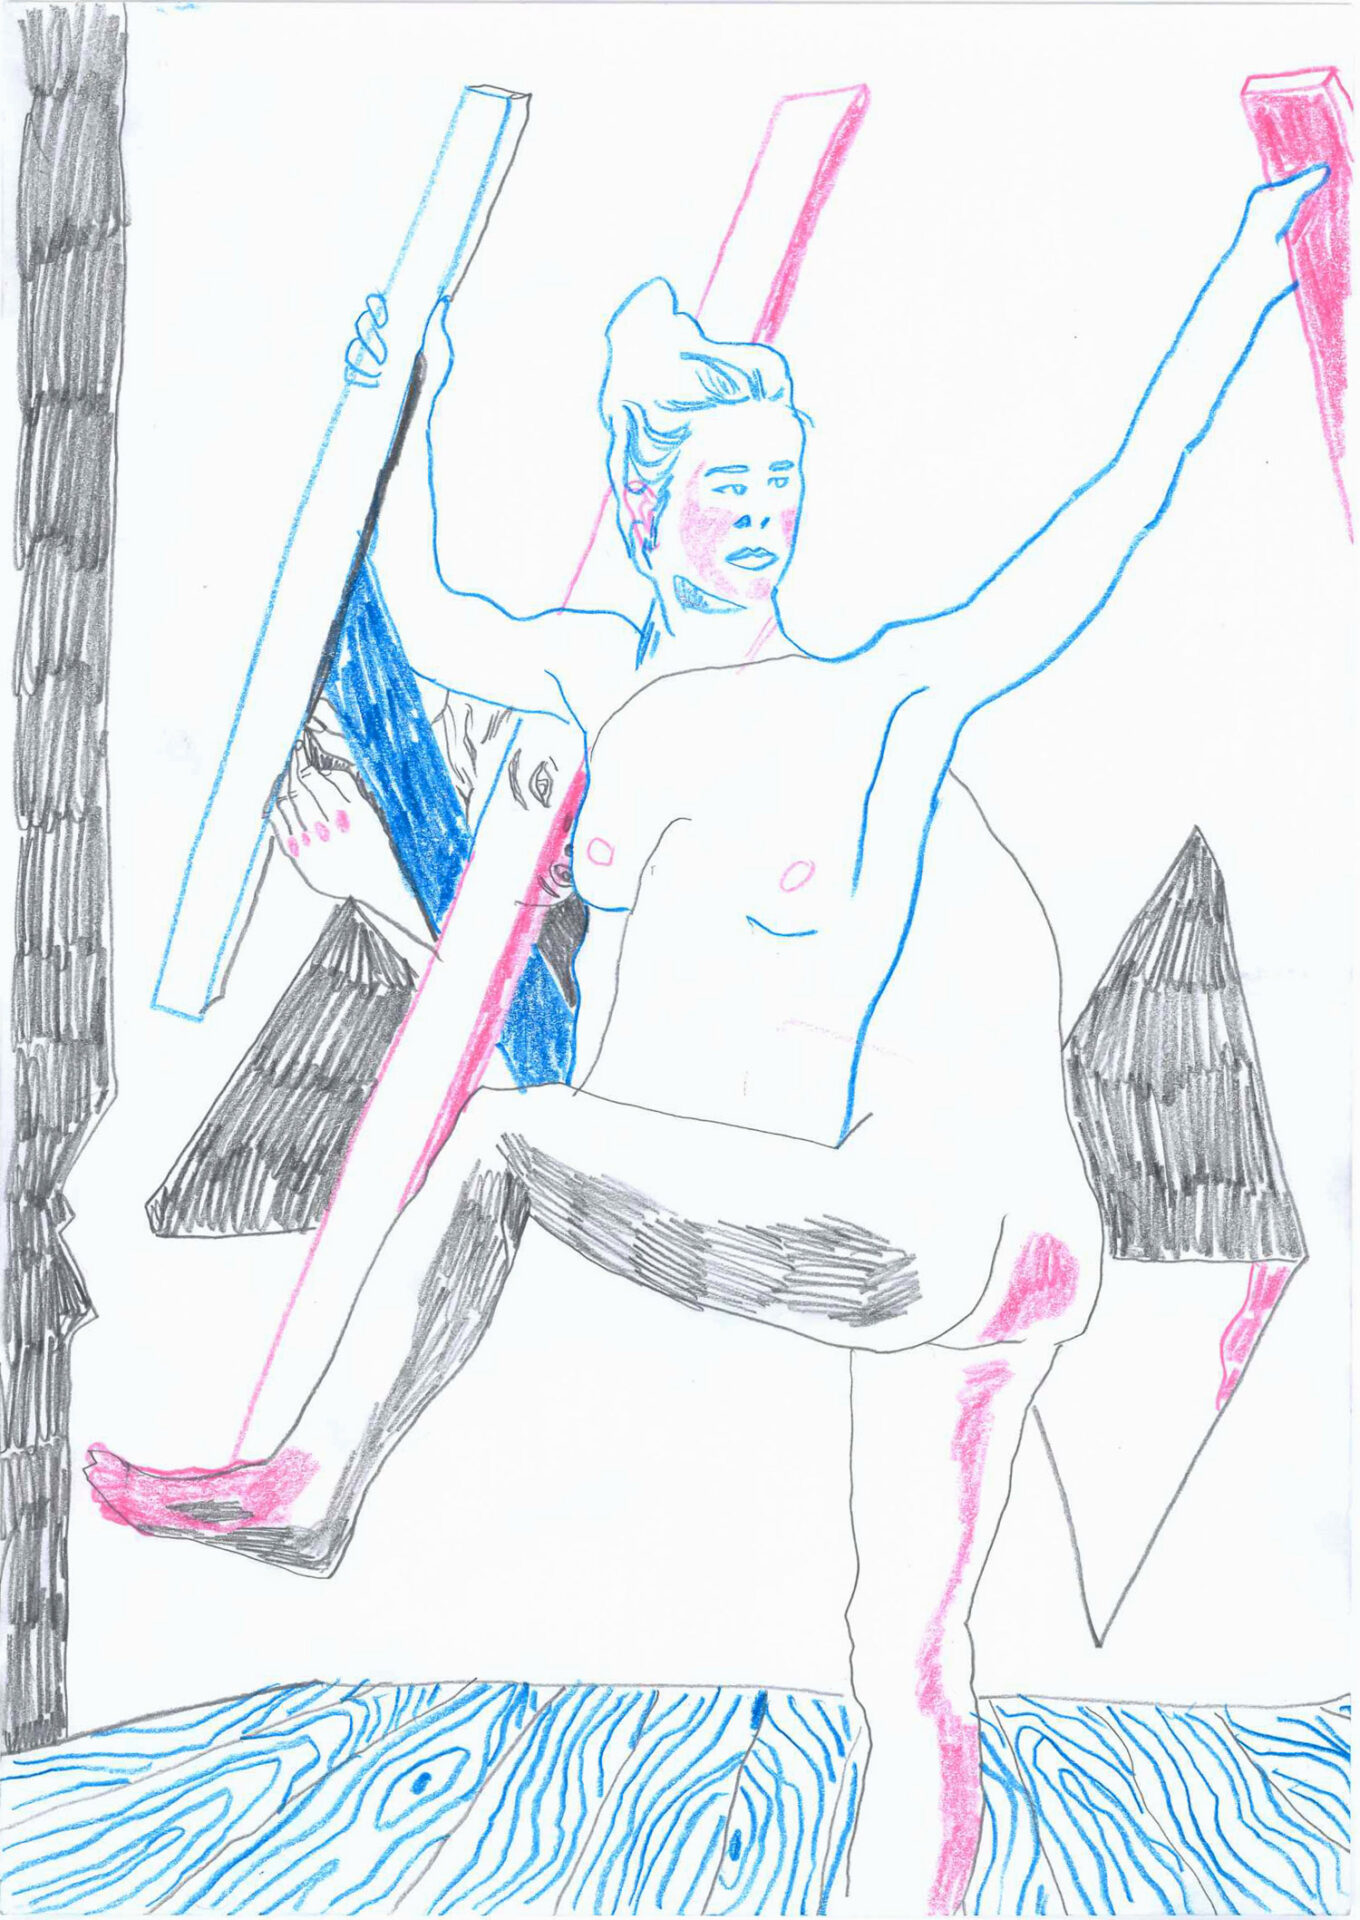 Woman (Hideout), colored pencil on paper, 29 x 21 cm, 2019, Lisa Breyer